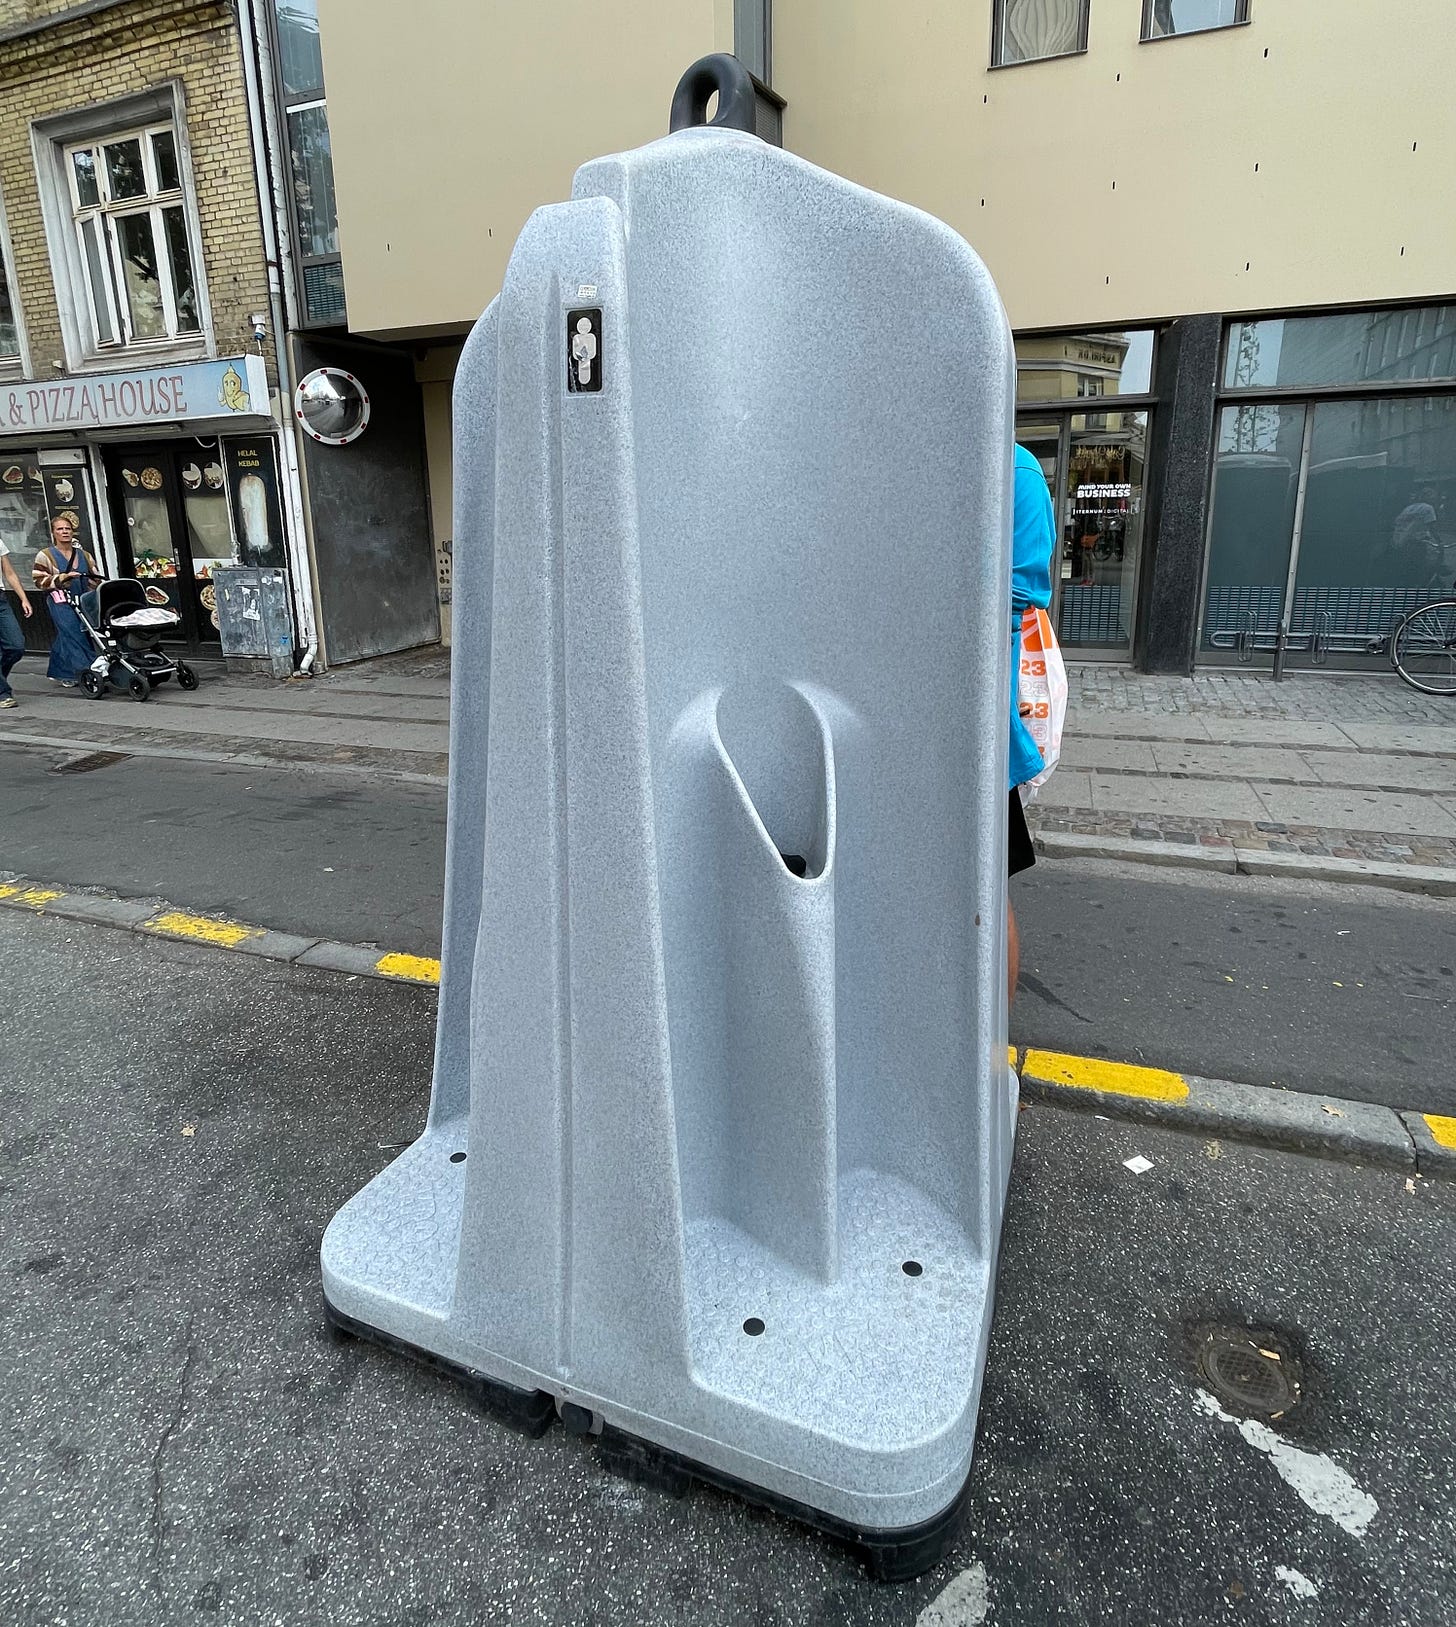 Porta-urinal in Copenhagen